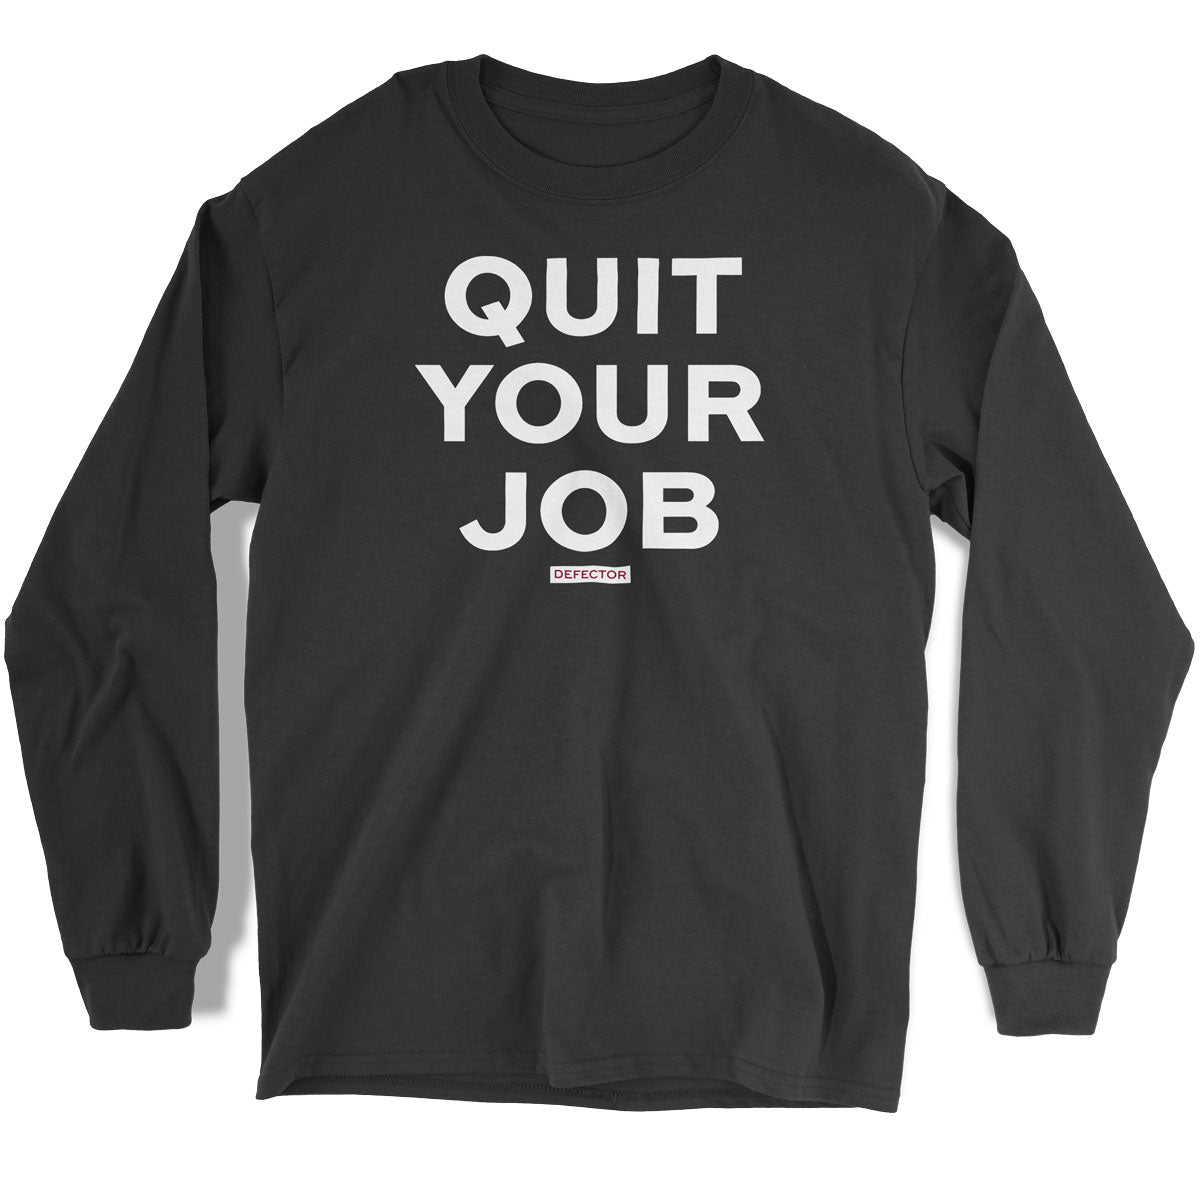 Quit Your Job long black sleeve tee